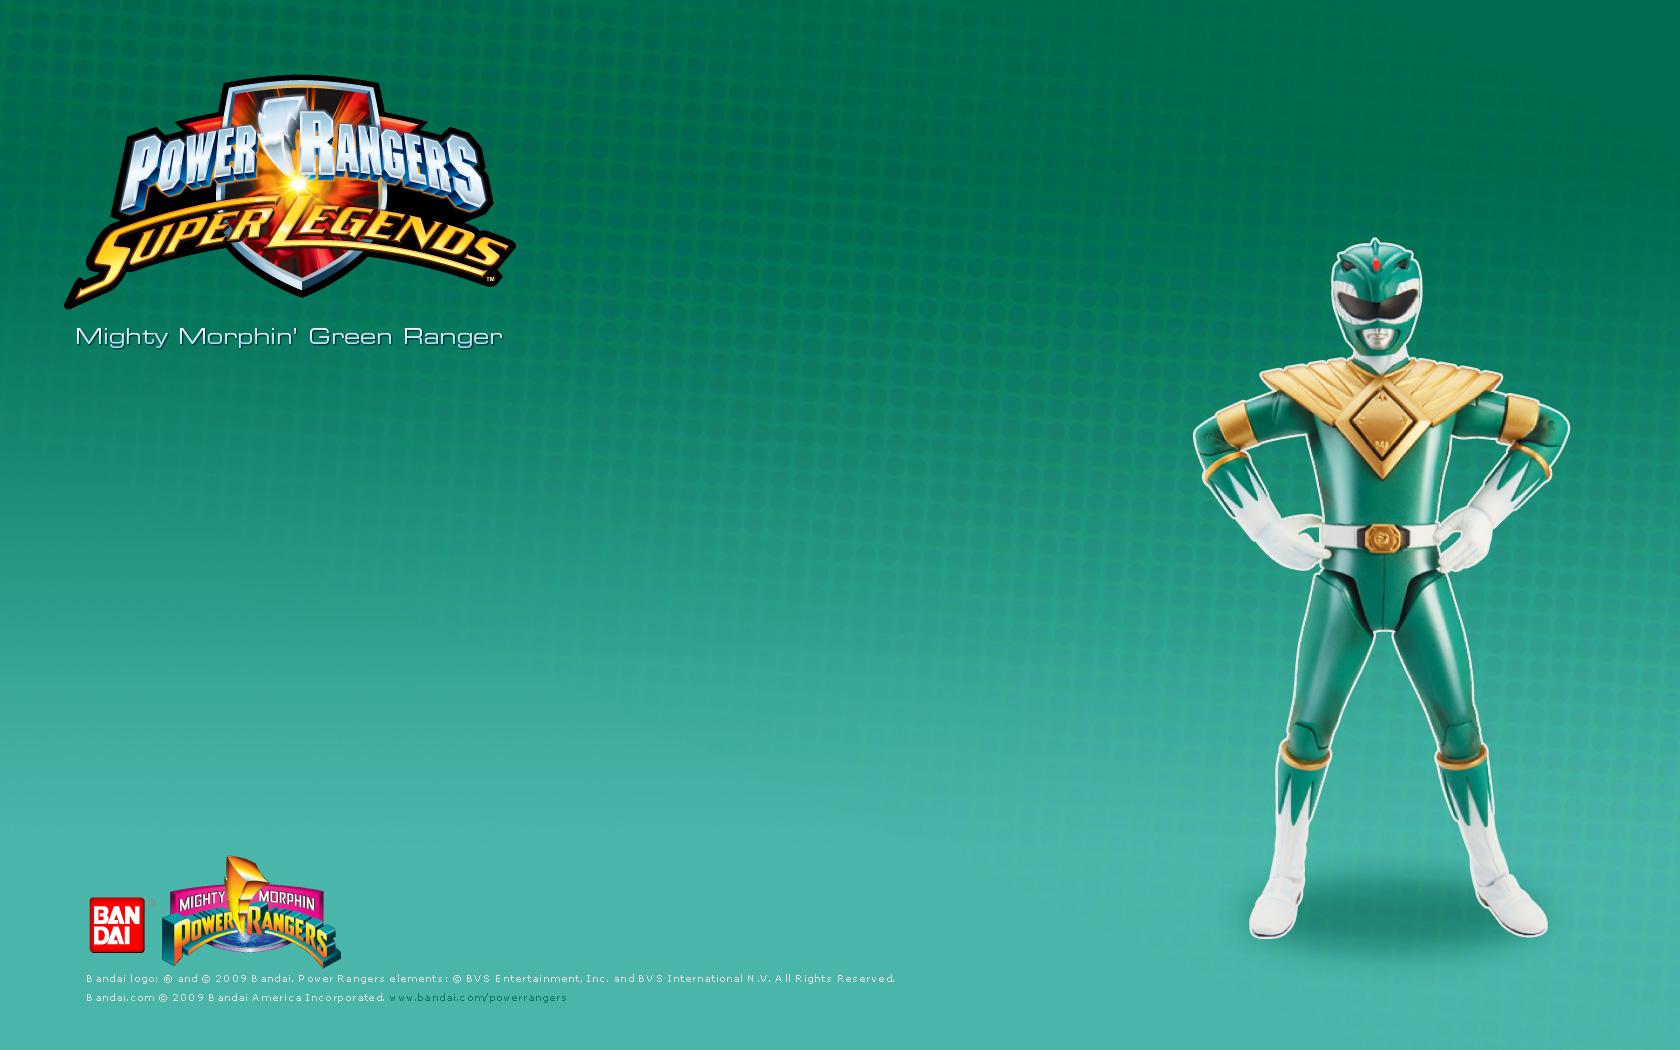 Bandai.com Wallpaper: find toys for Power Rangers, Ben 10